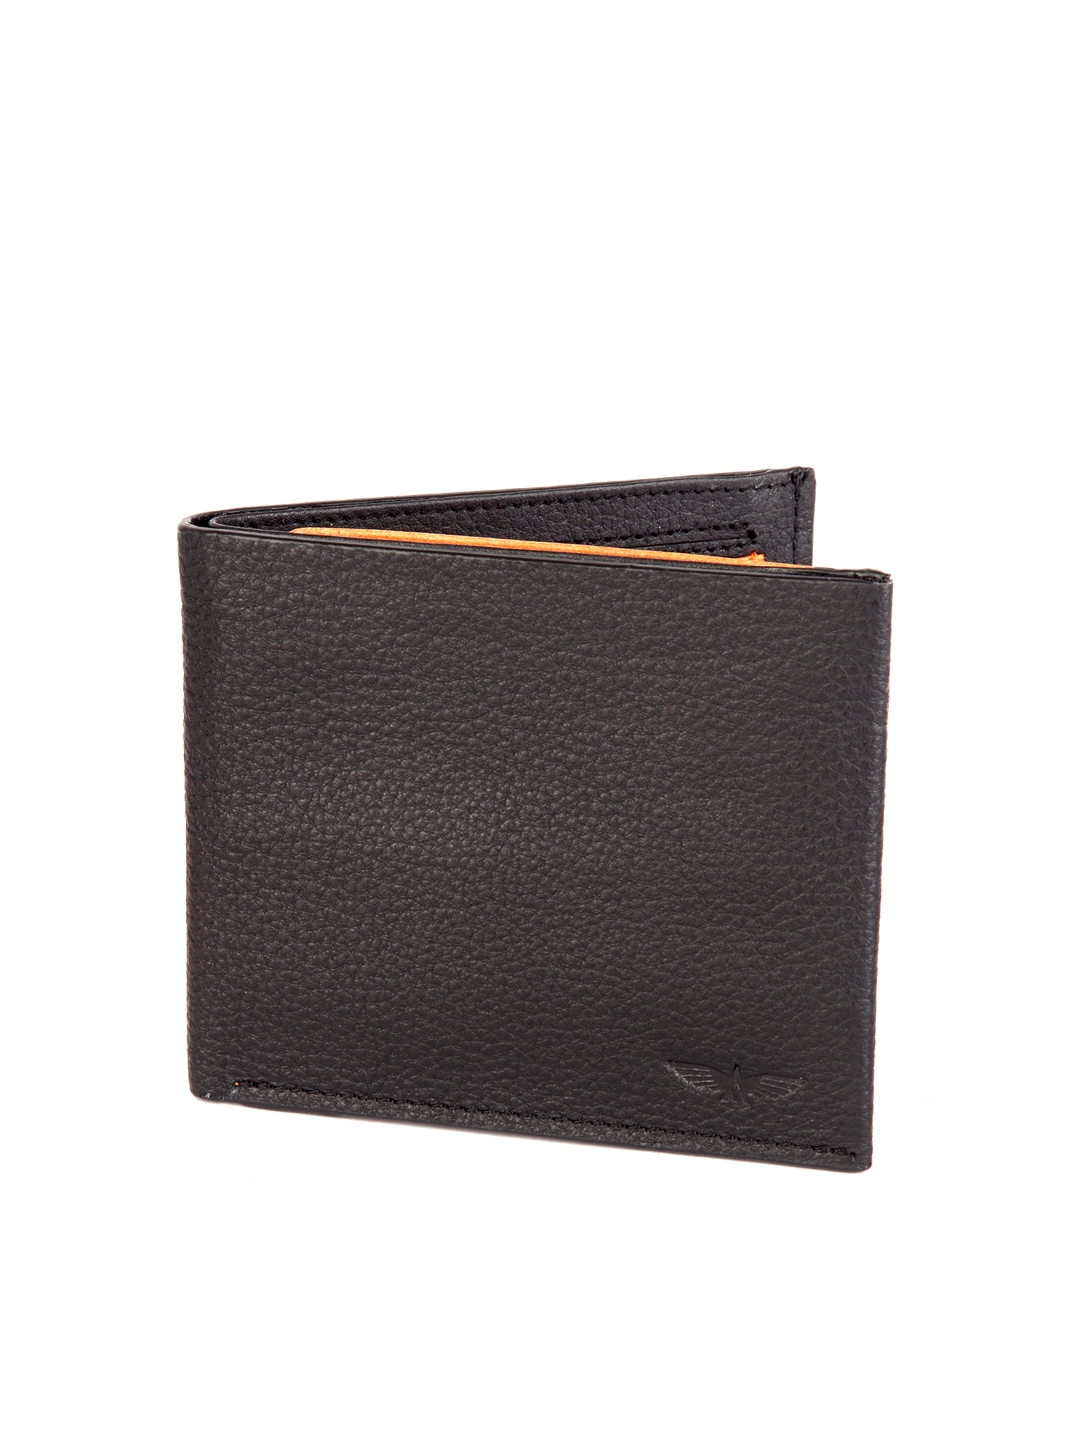 Buy Park Avenue Men Brown Leather Wallet - Wallets for Men 1077603 | Myntra